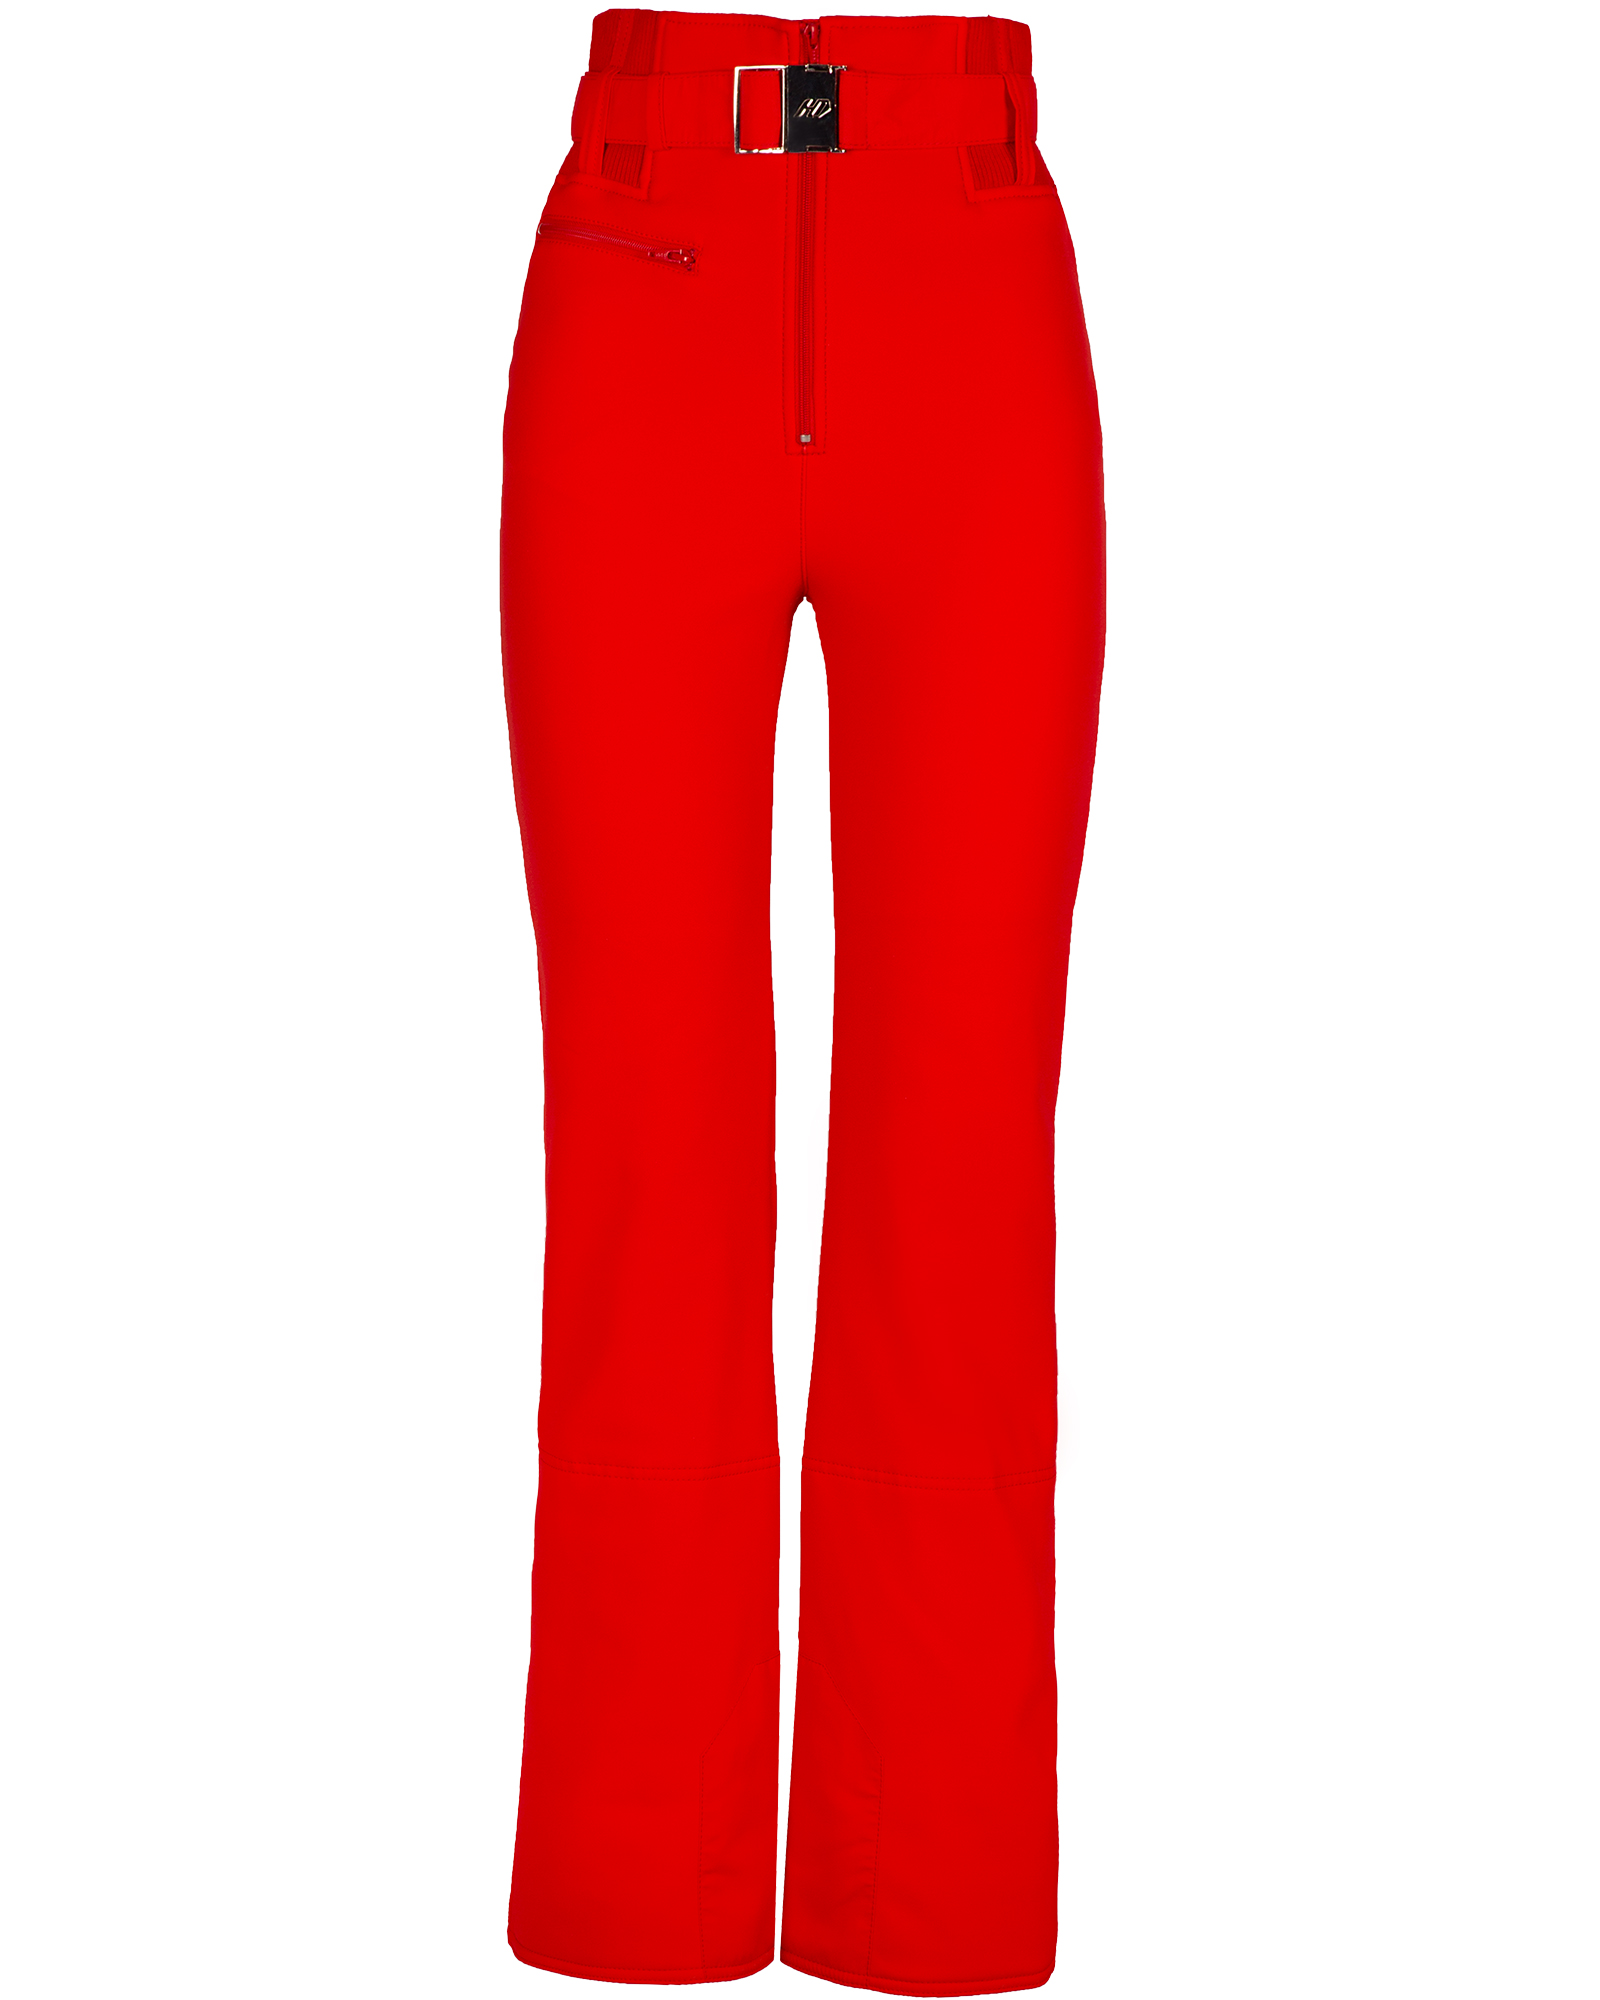 Duvillard Gridin Women’s Pants - Red 14